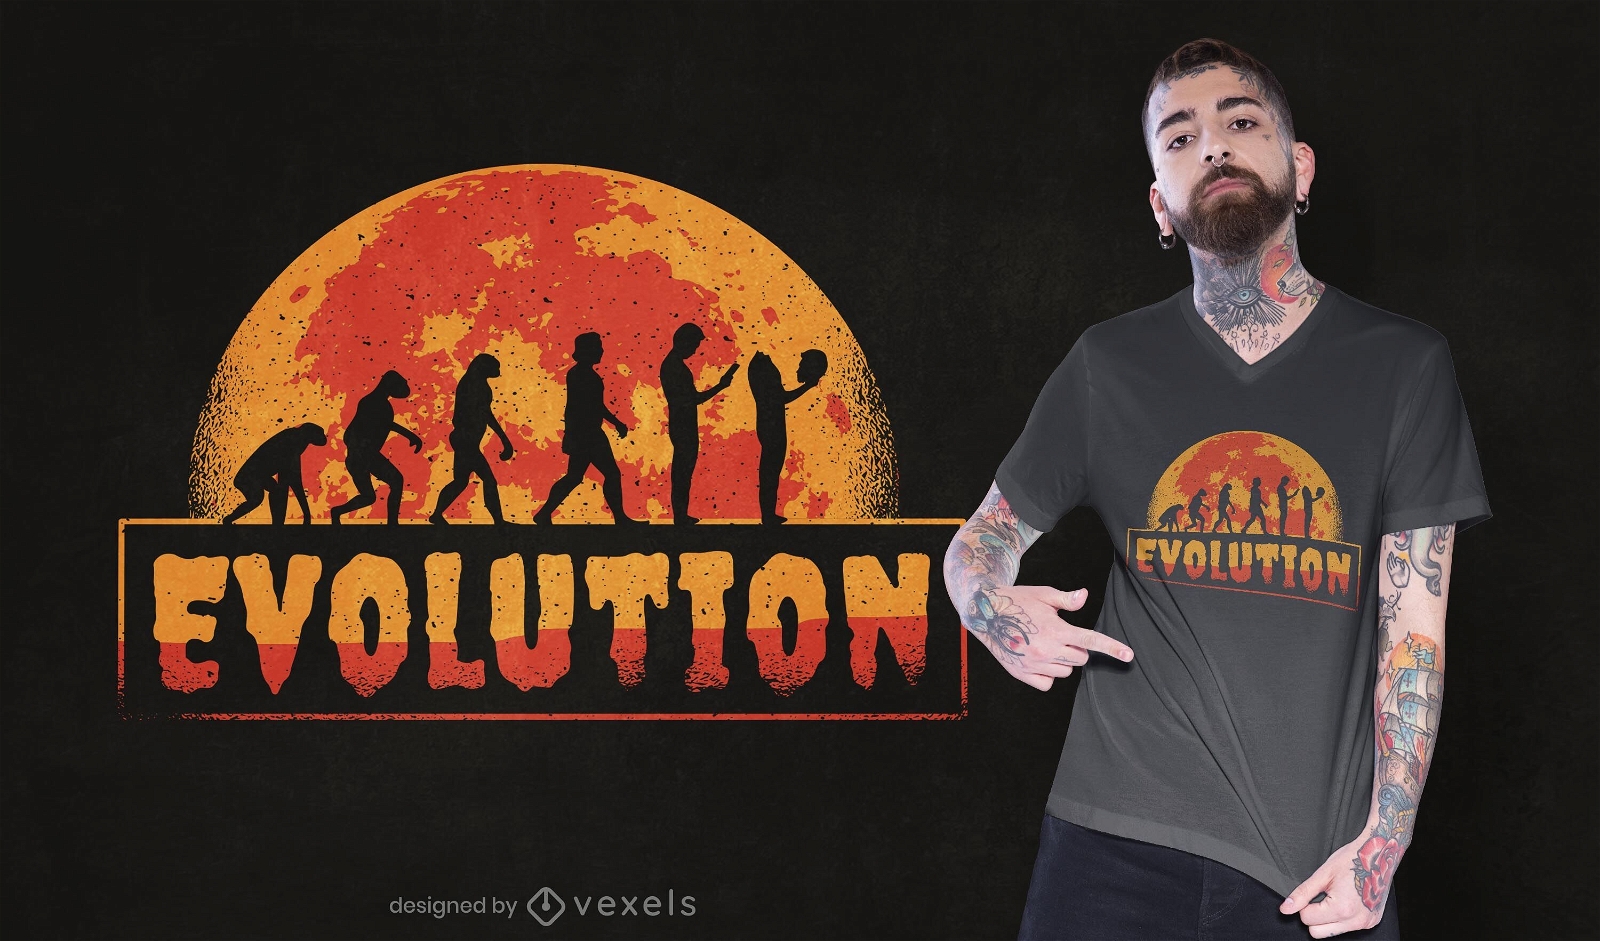 Dise?o de camiseta de evoluci?n espeluznante